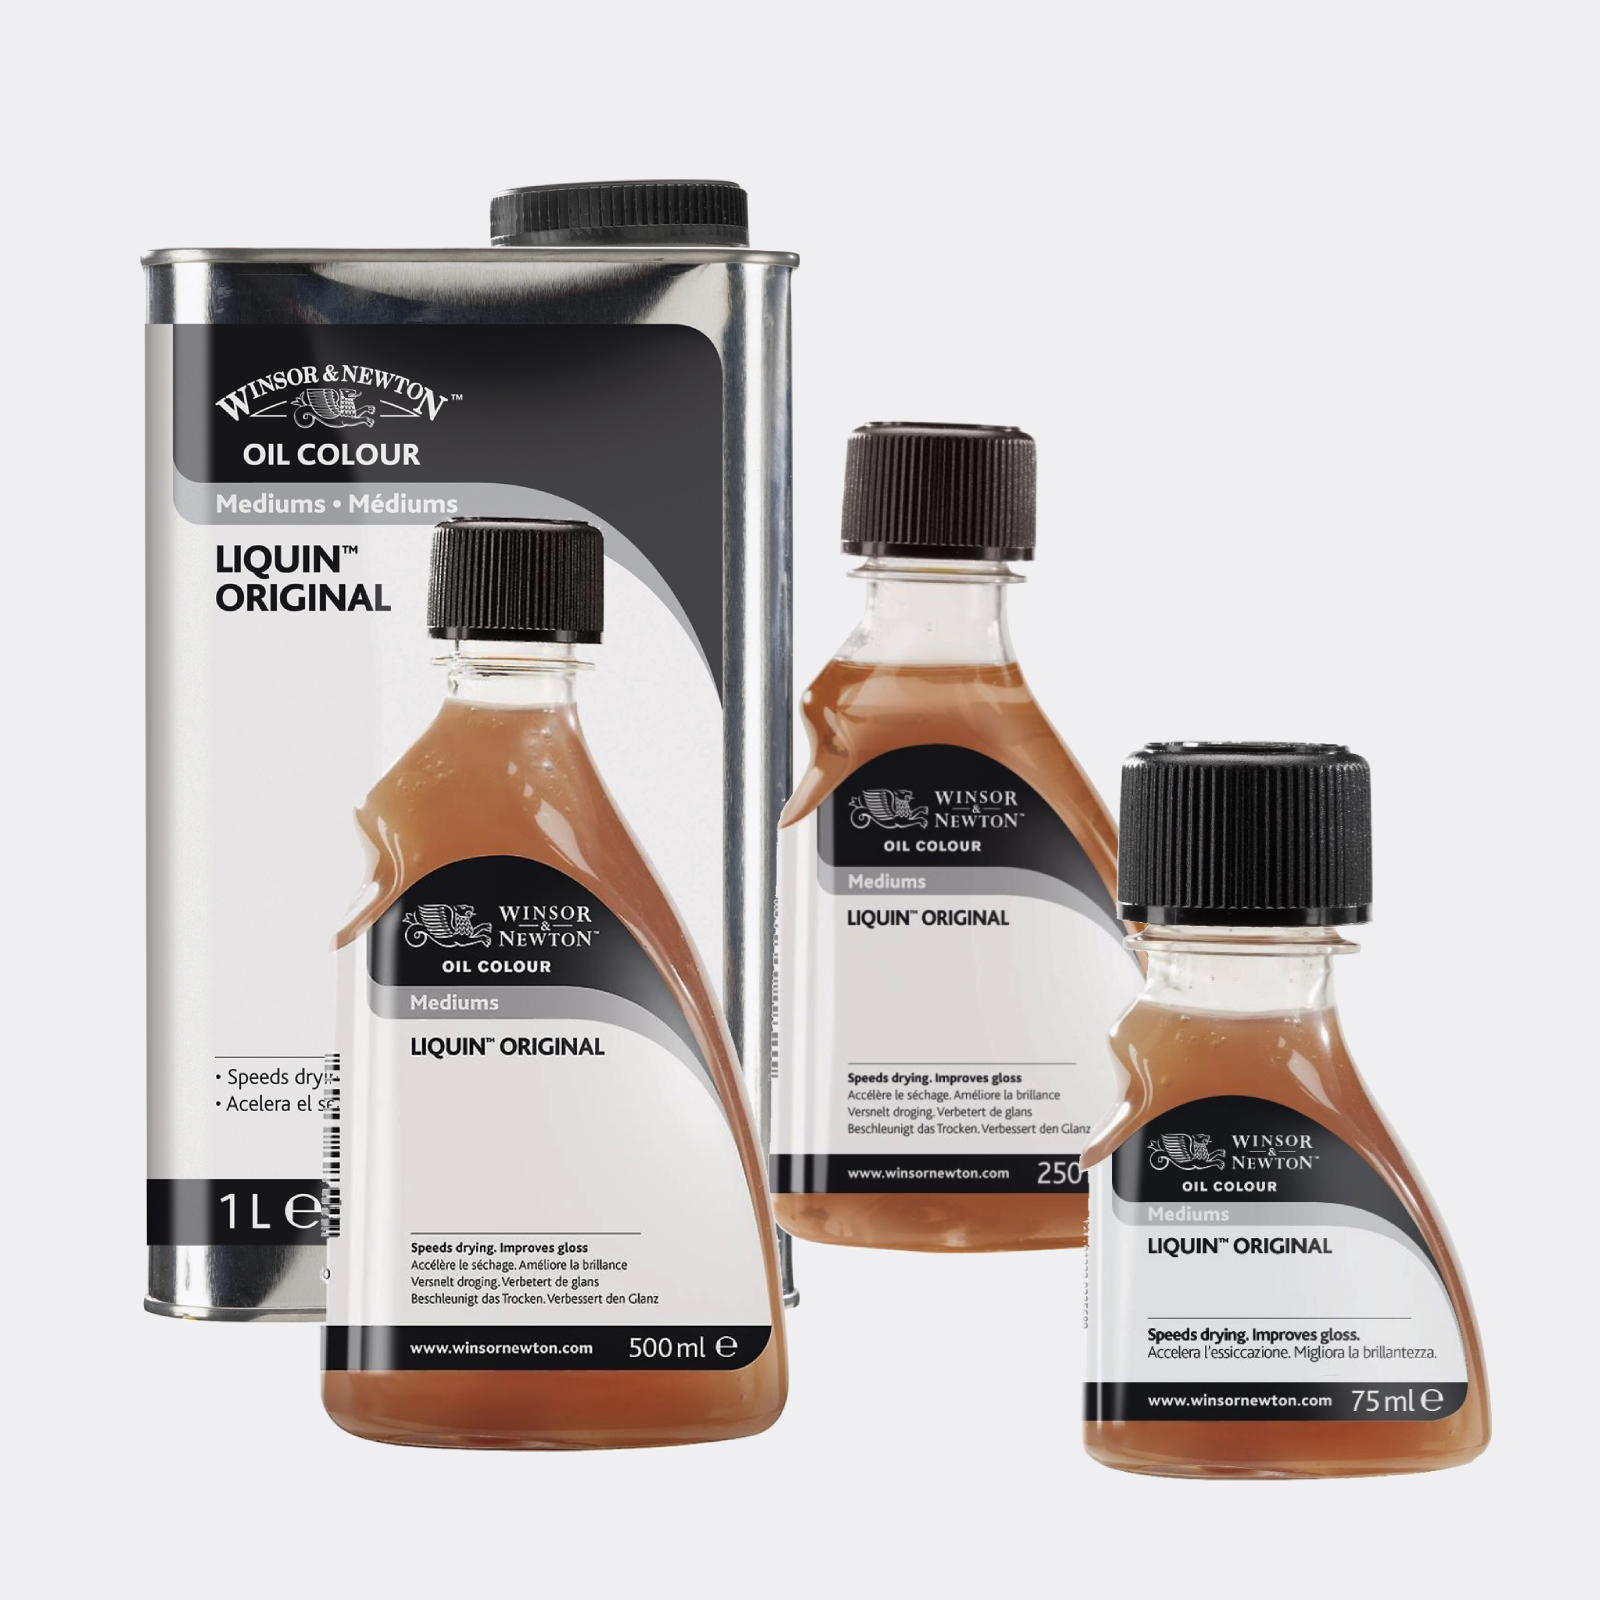 Mediums - Winsor & Newton Oil Colour Medium, Liquin Original, 1000ml